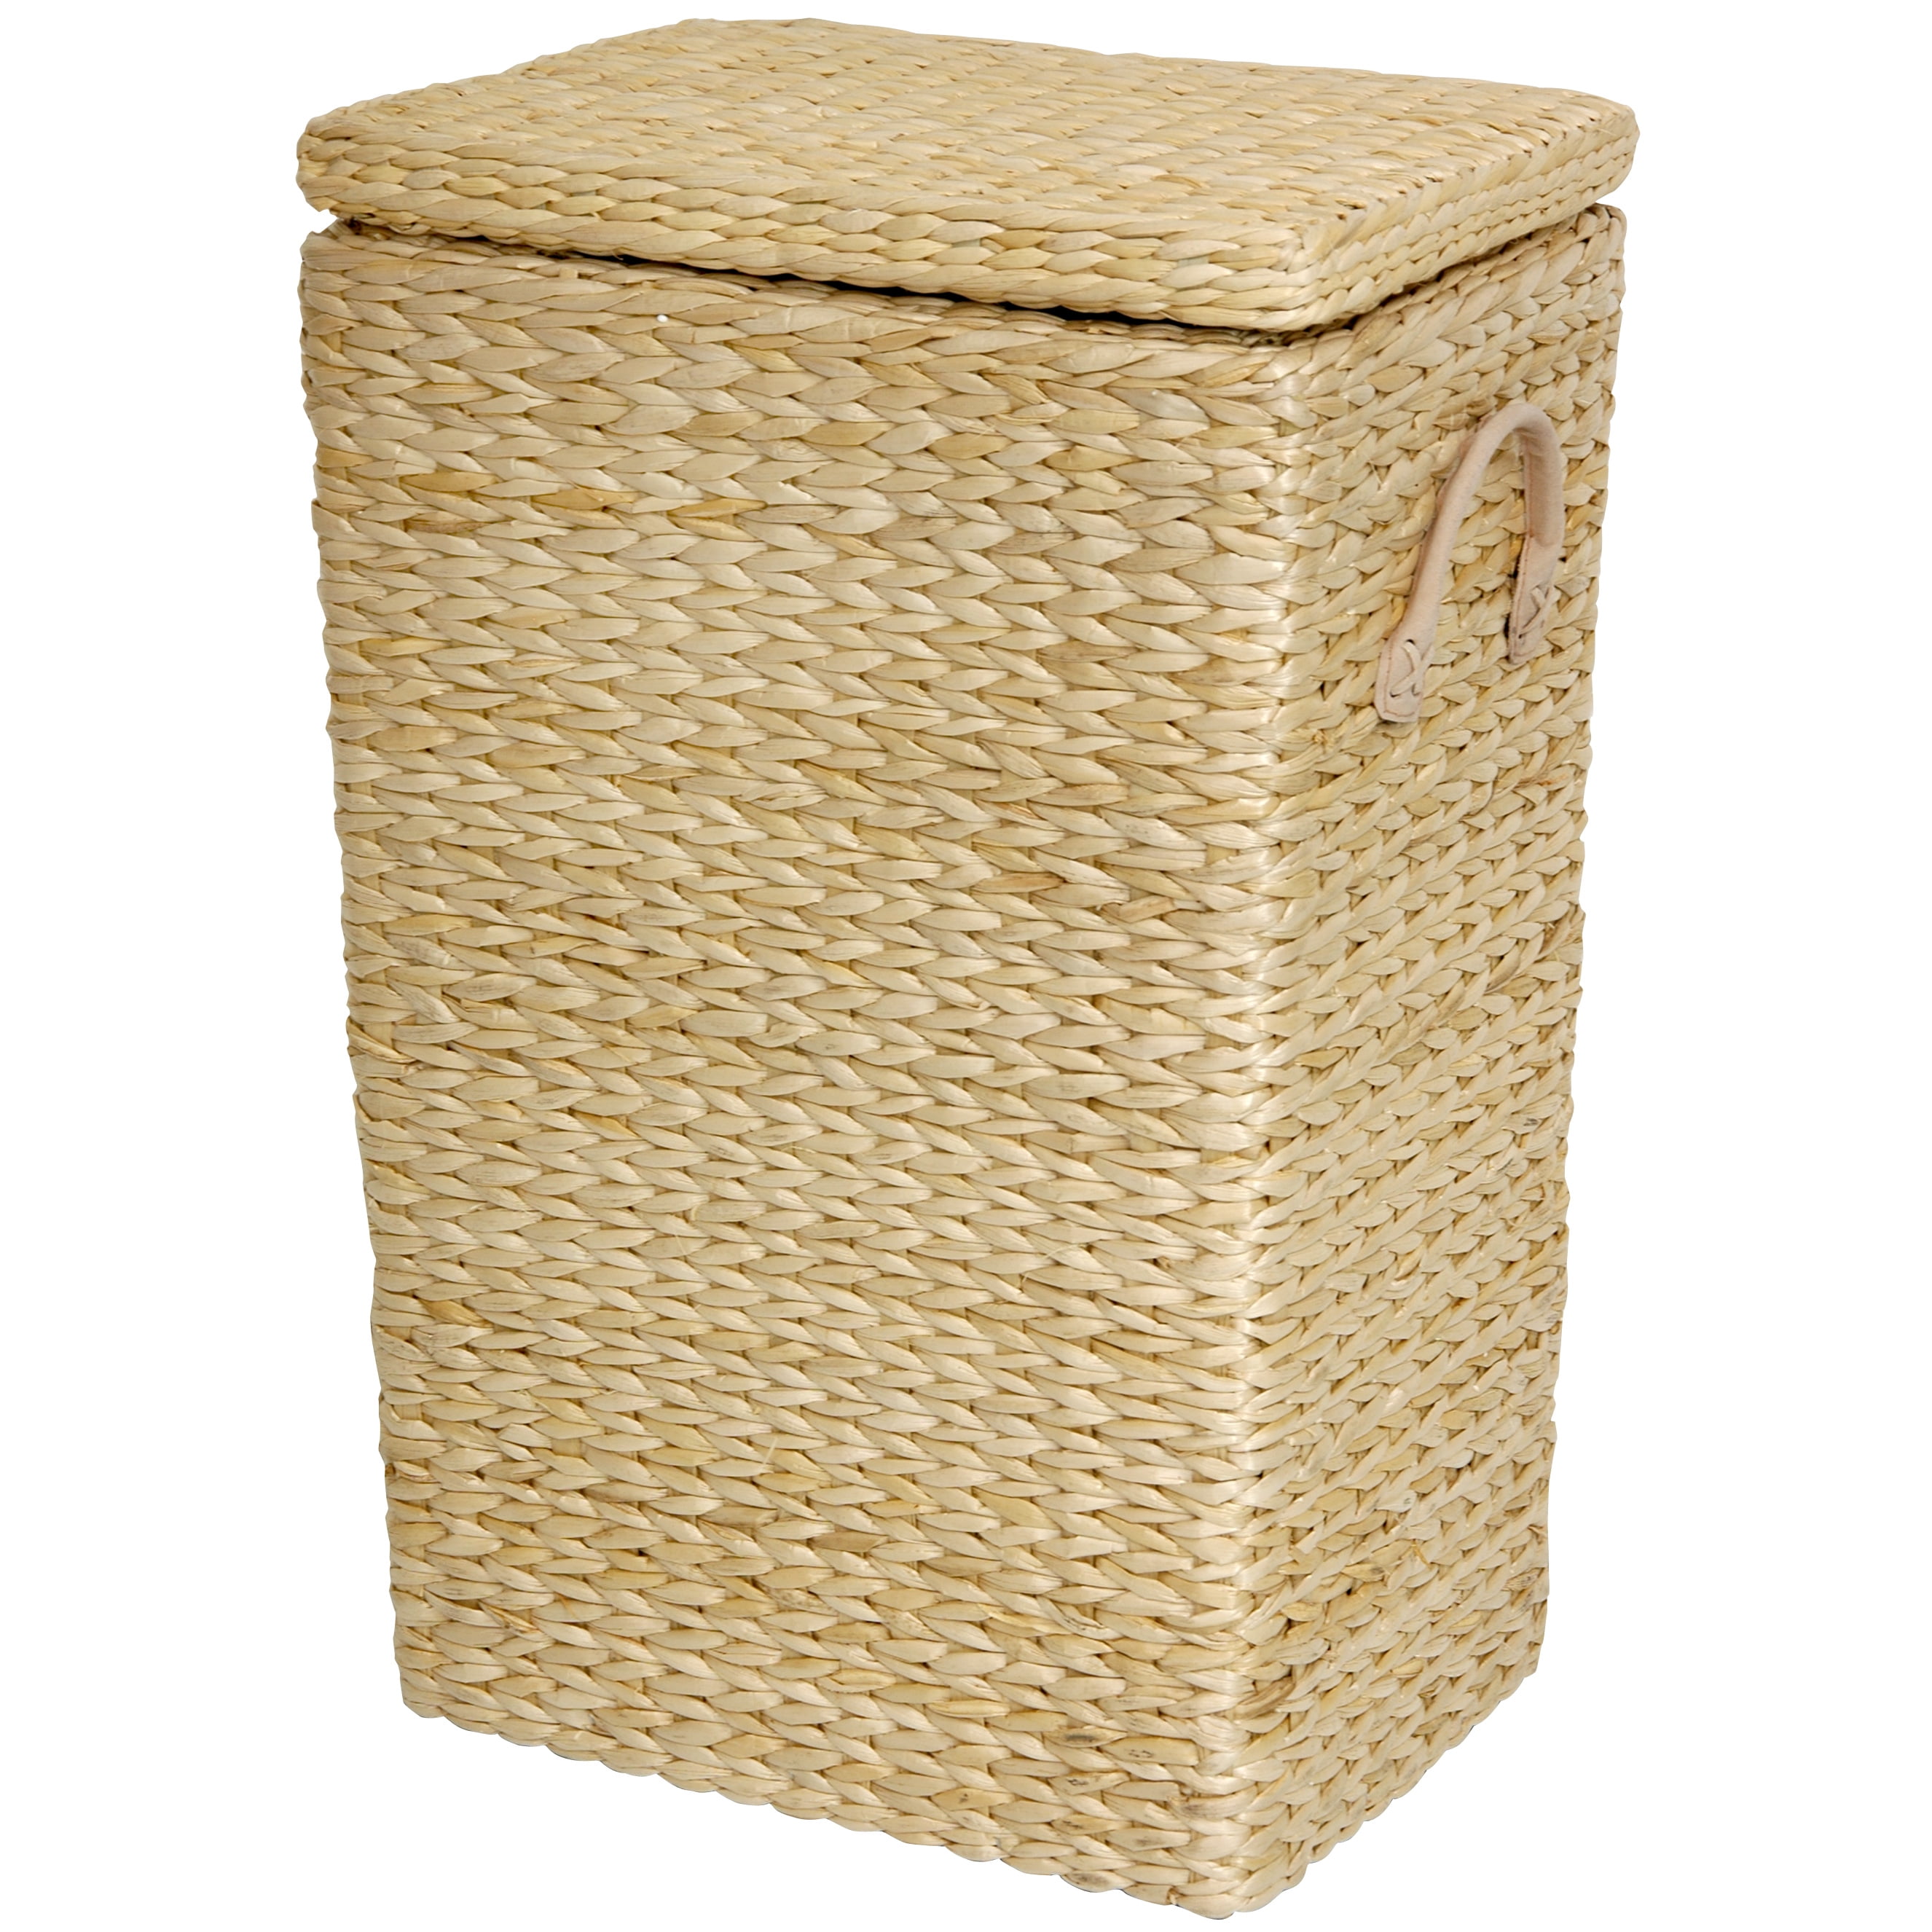 Oriental Furniture Rush Grass Laundry Basket, Natural - Walmart.com